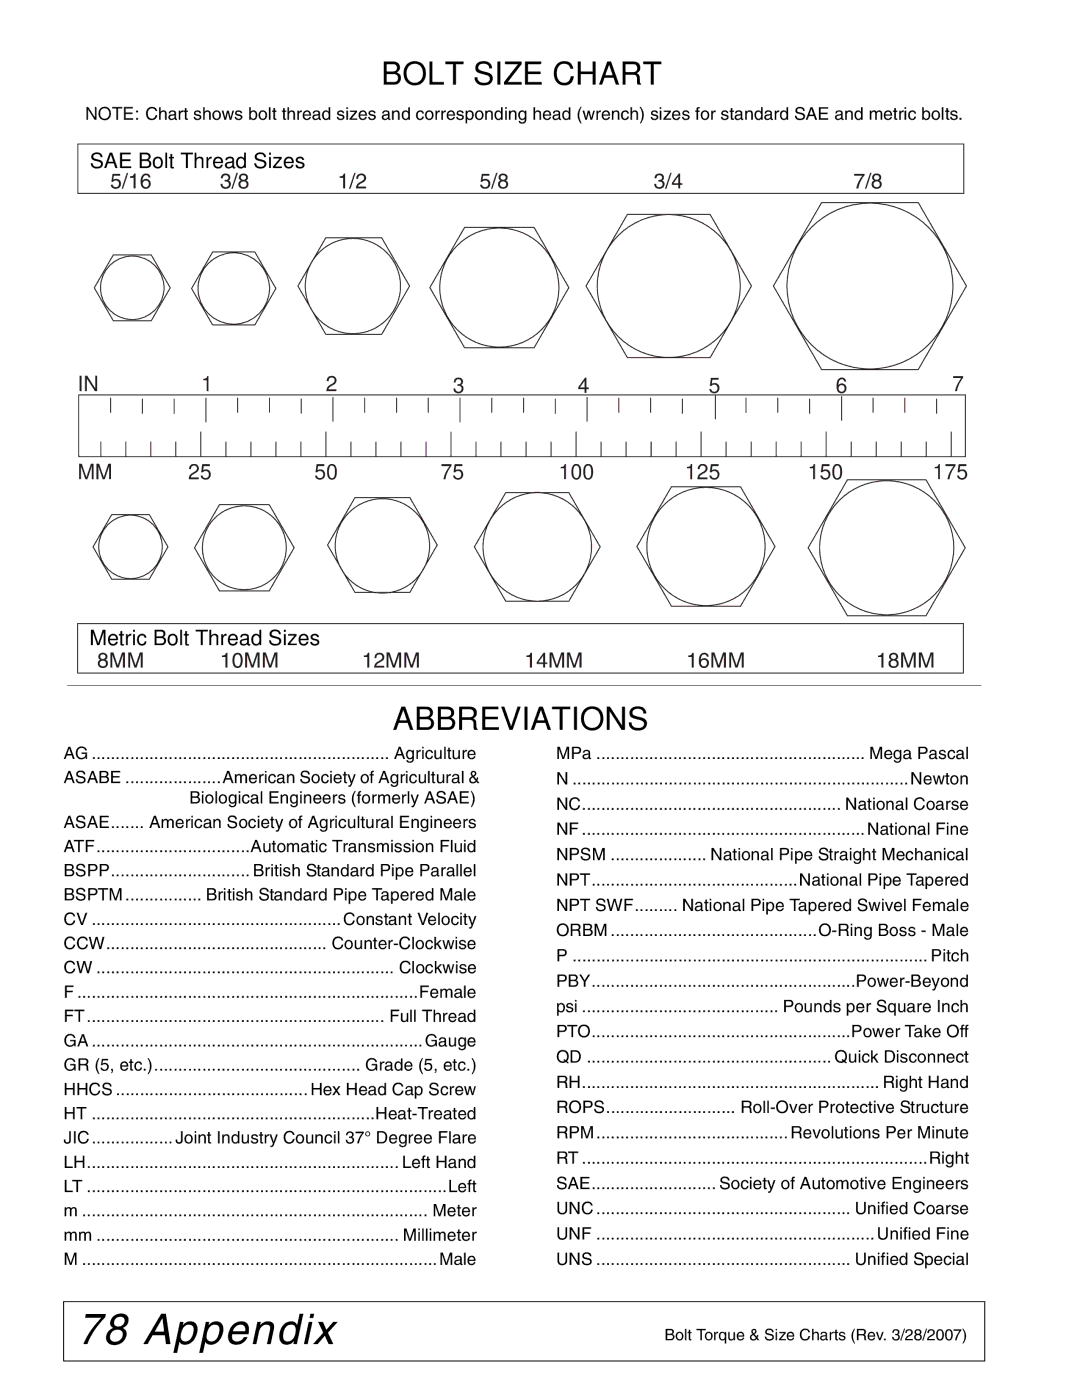 Woods Equipment TS1680Q manual Bolt Size Chart, Abbreviations 